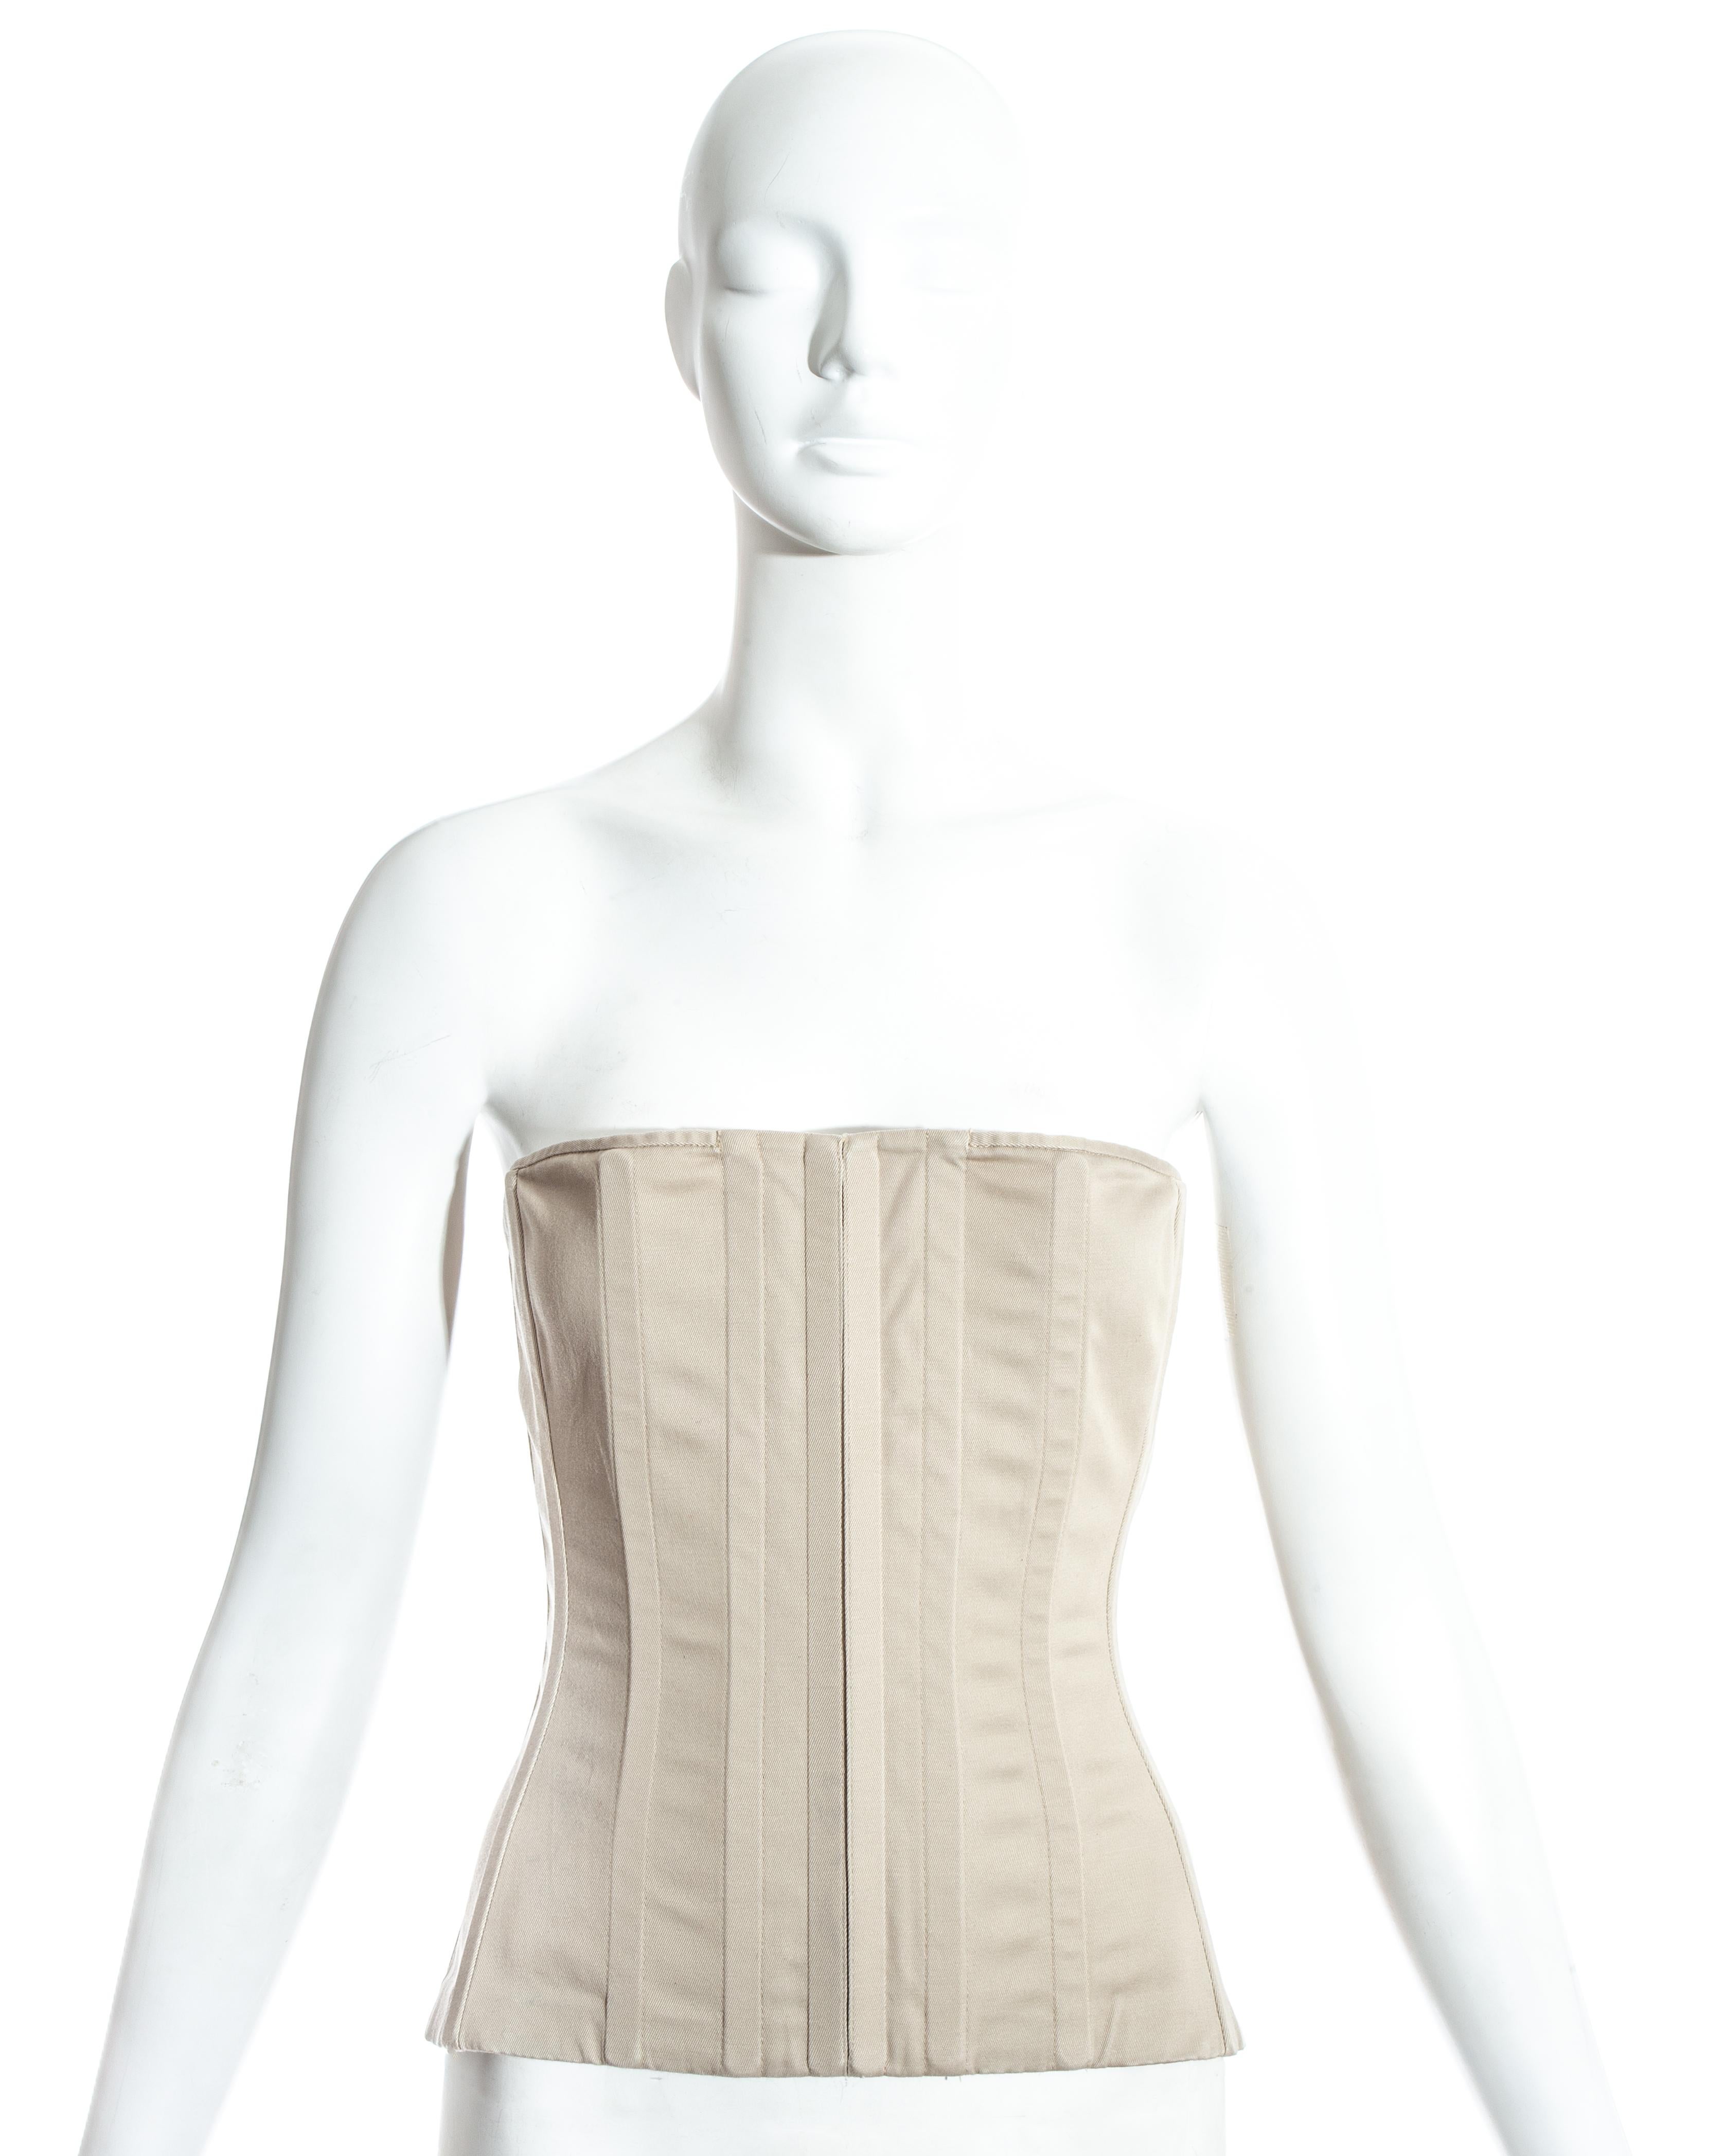 Dolce & Gabbana ivory cotton bustier corset

c. 1990s